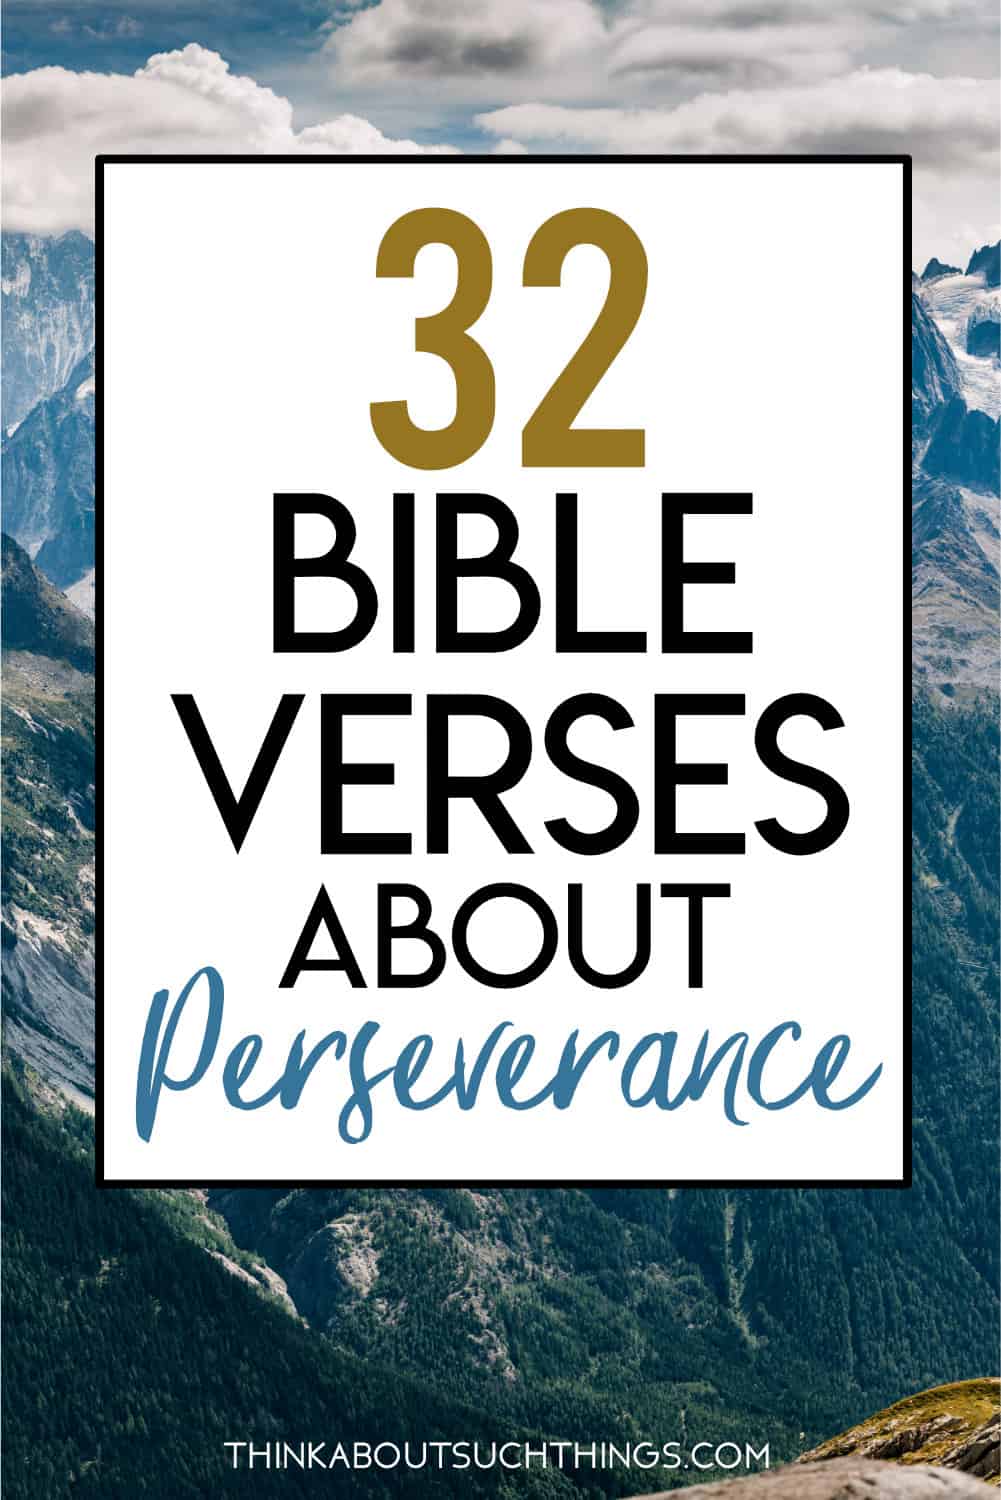 teach my children to run with perseverance bible verse